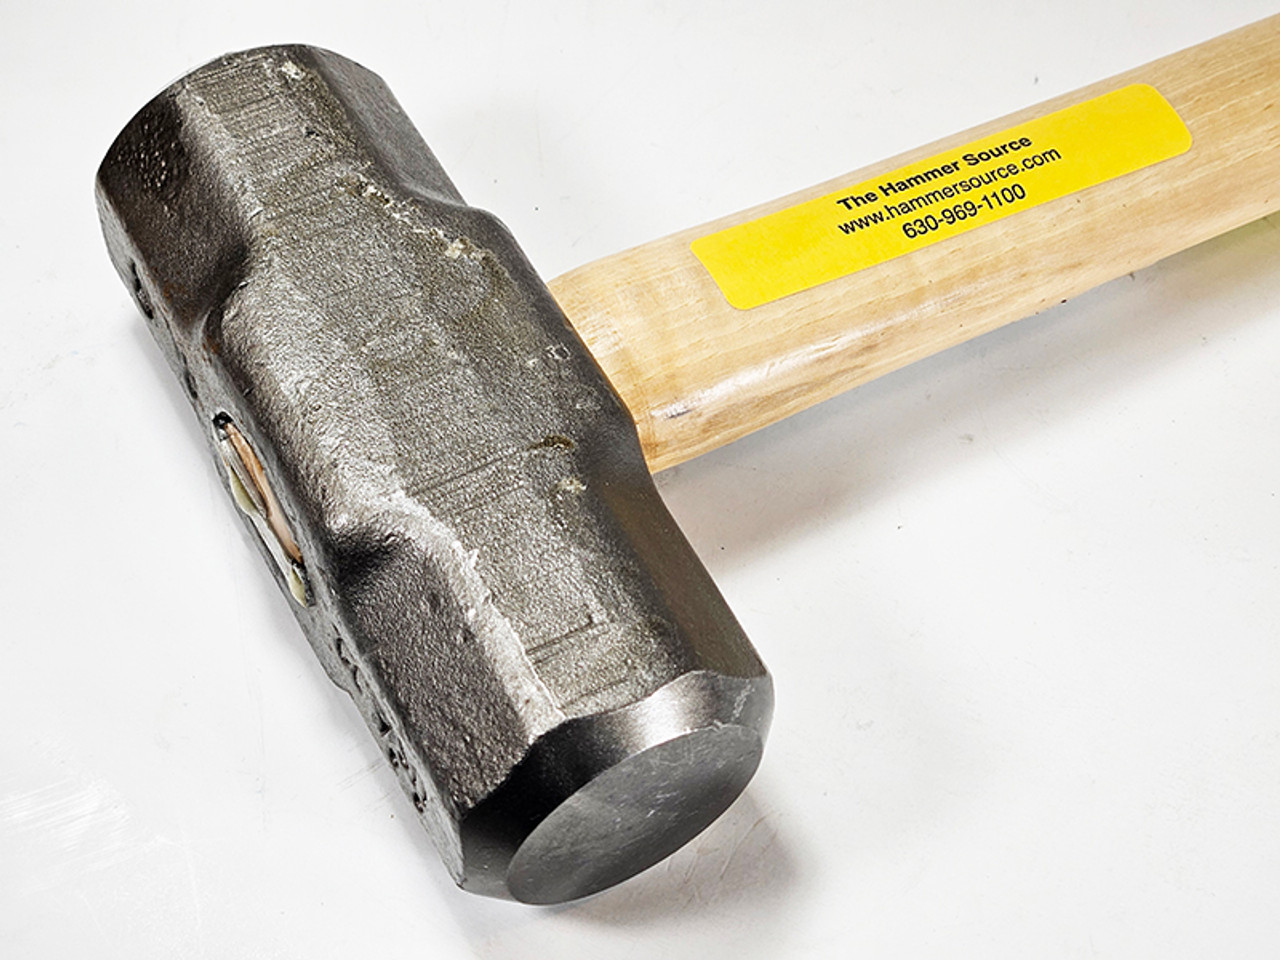 8 lb Steel Sledge Hammer with 16" wood handle